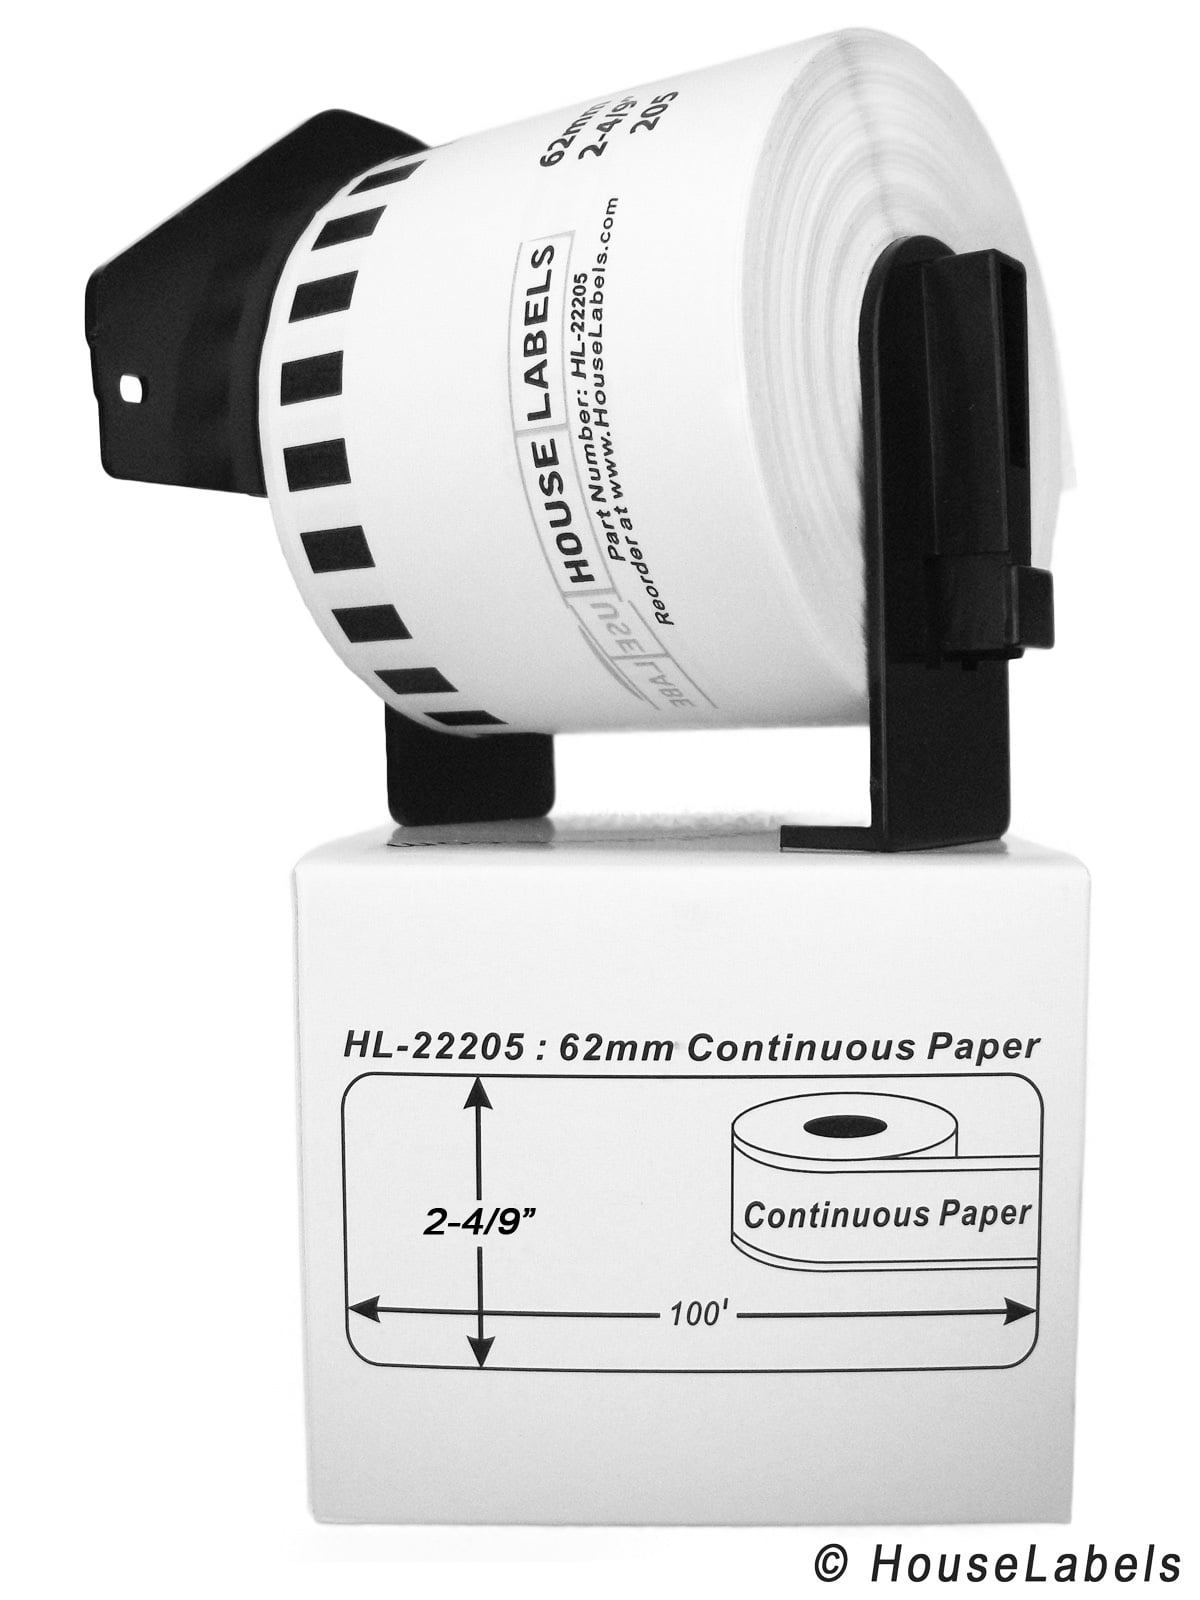 6 Rolls; Continuous Paper 2-4/9 x 100; 62mm30.48m - BPA Free! HouseLabels Brother Compatible DK-2205 Continuous Paper Labels 